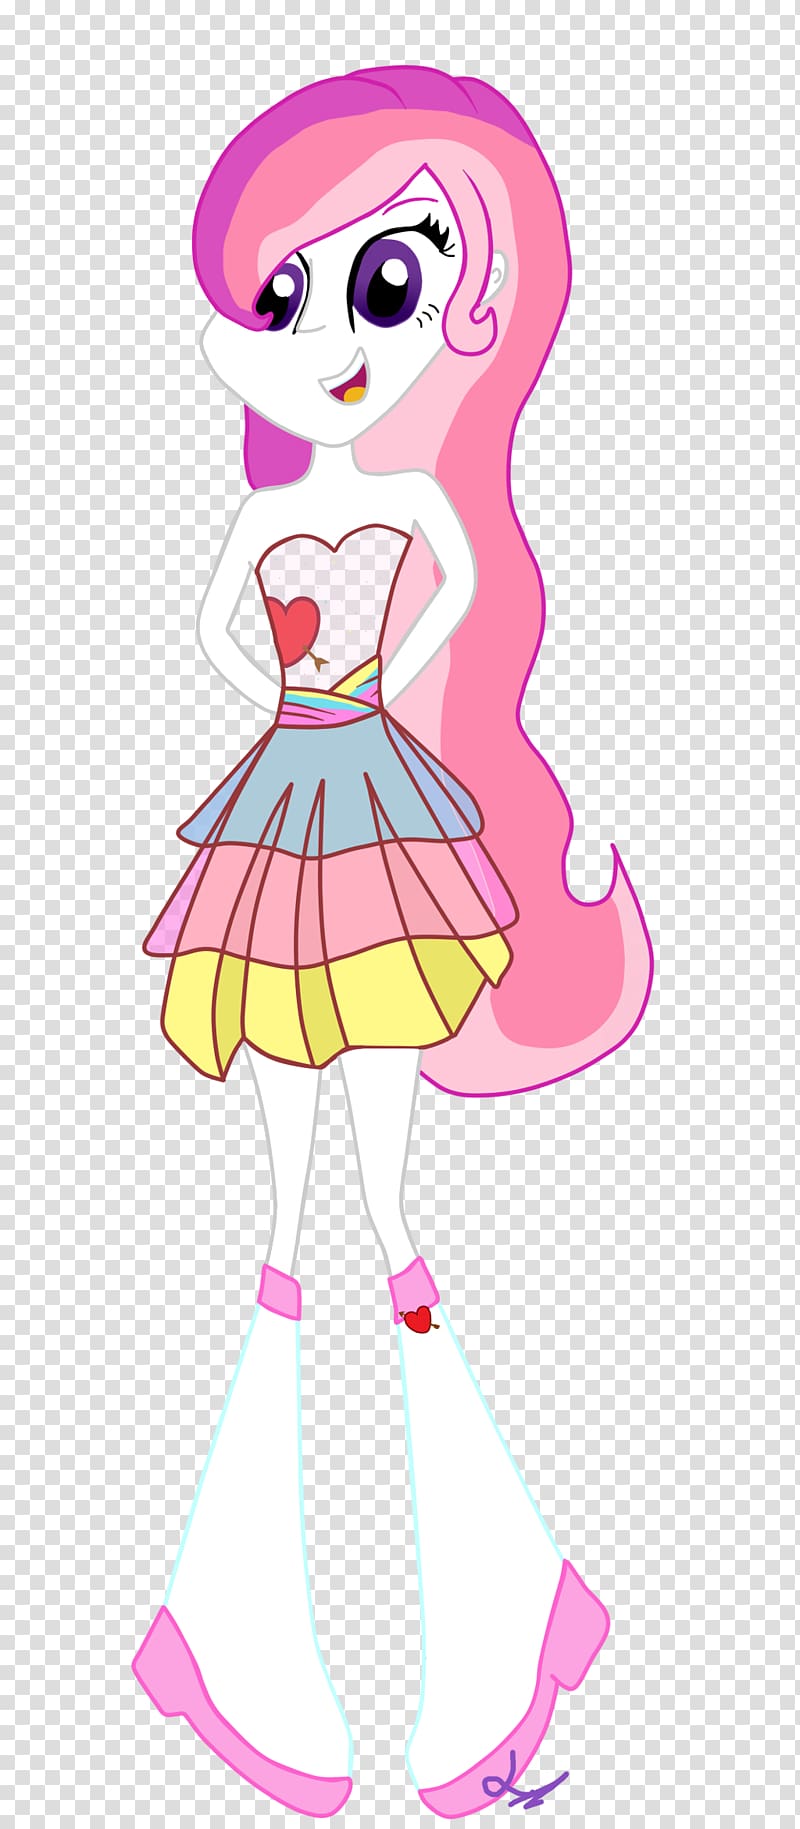 Dress Twilight Sparkle Rarity Pinkie Pie Rainbow Dash, don't dress revealing manners transparent background PNG clipart